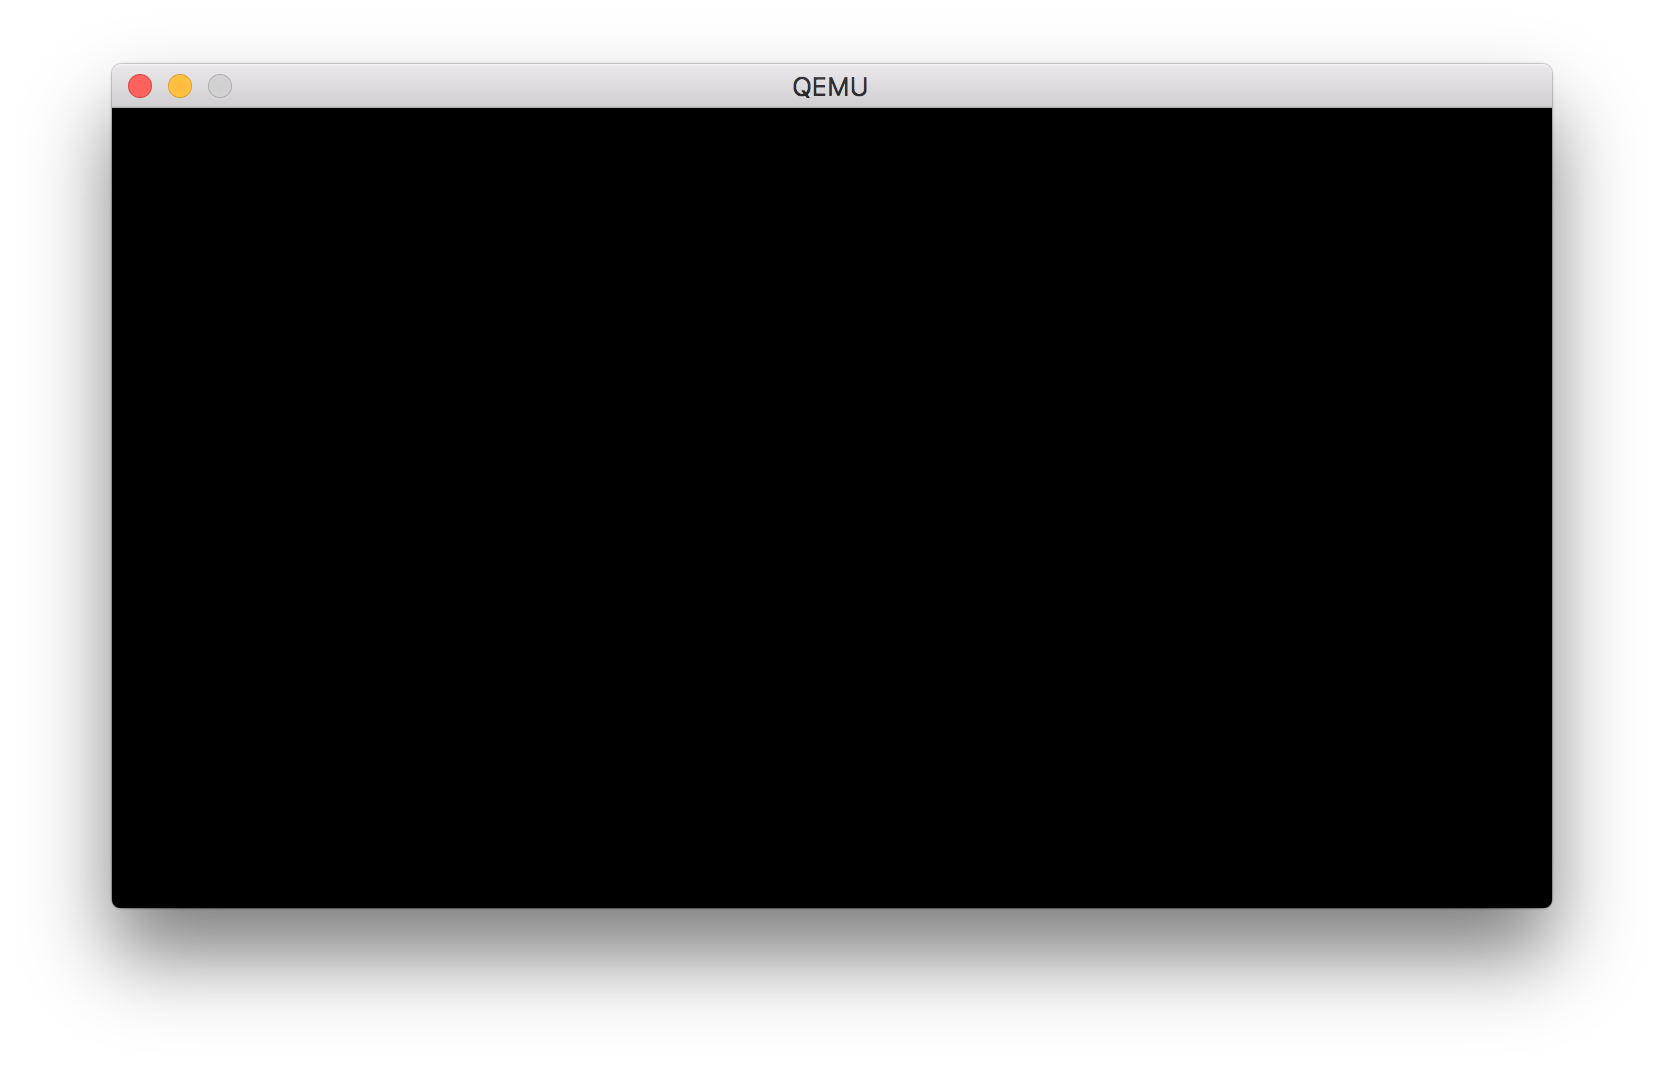 Blank QEMU screenshot